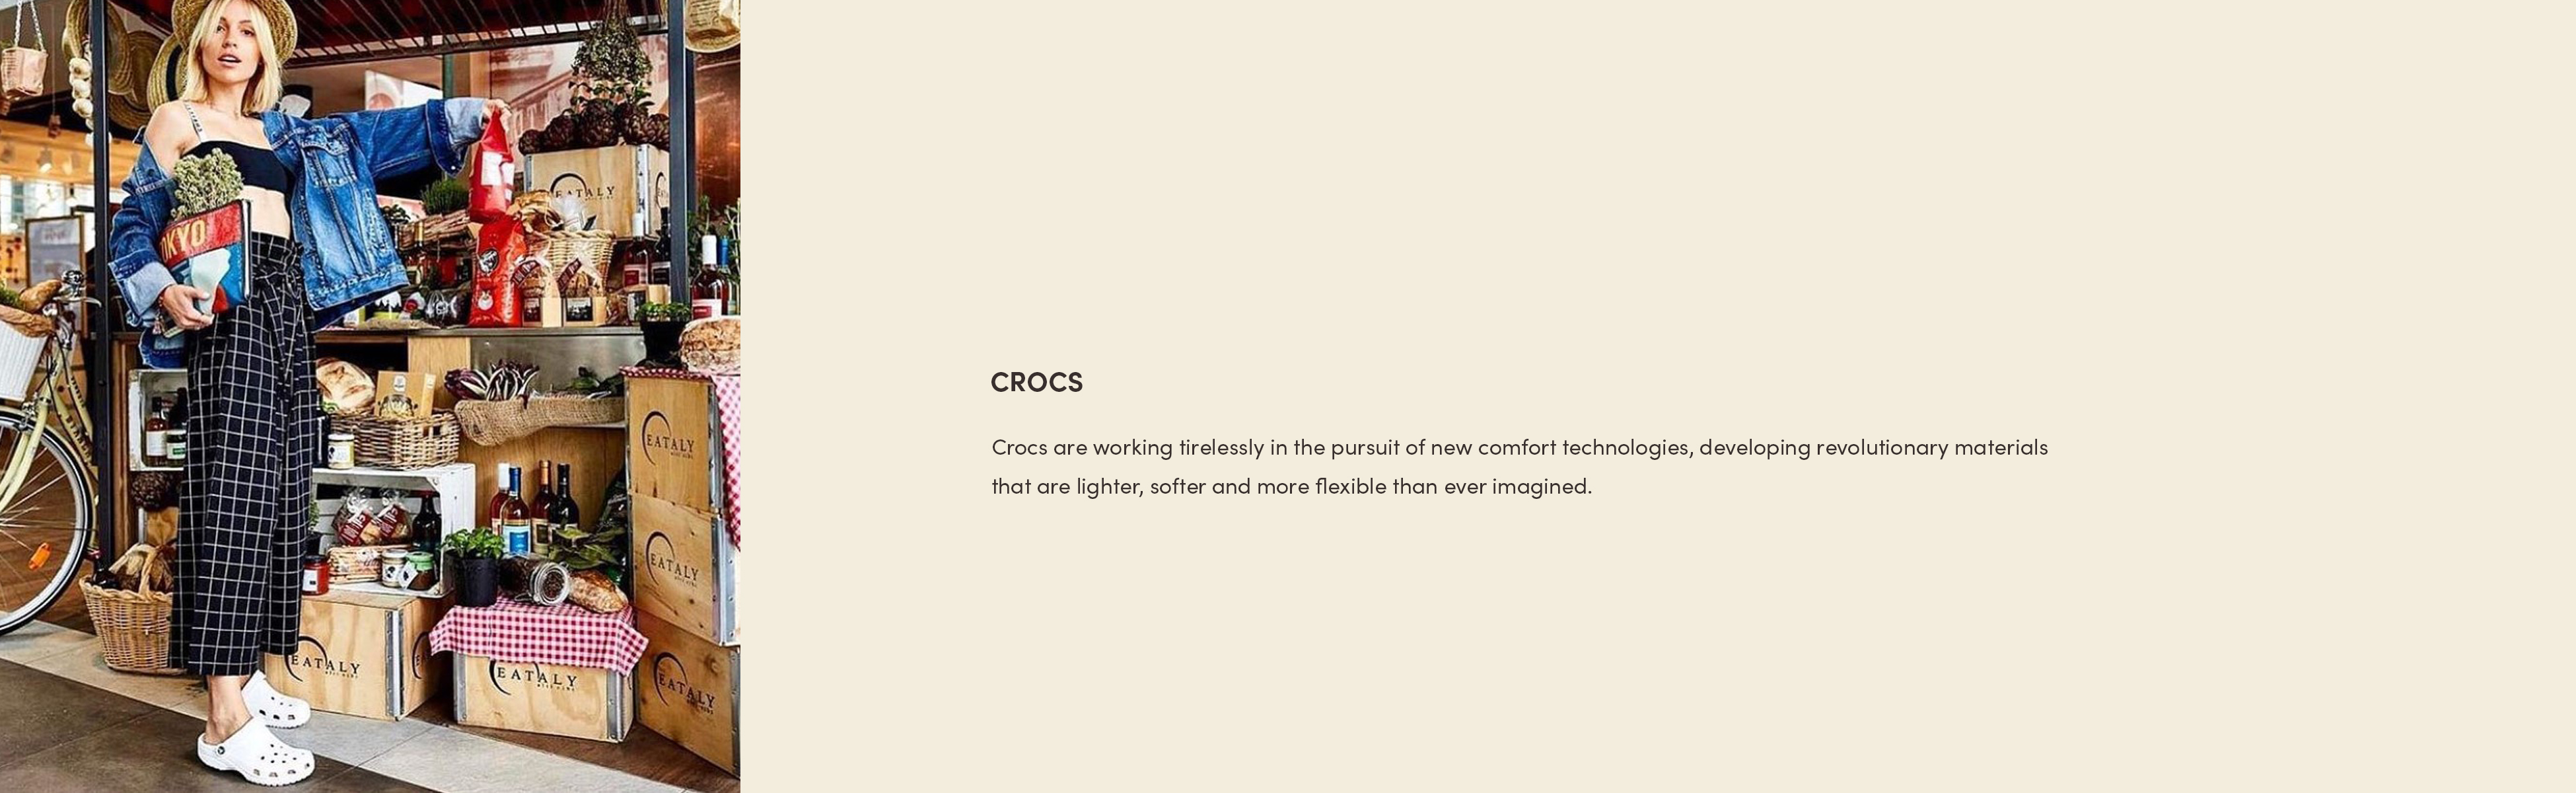 Crocs_banner